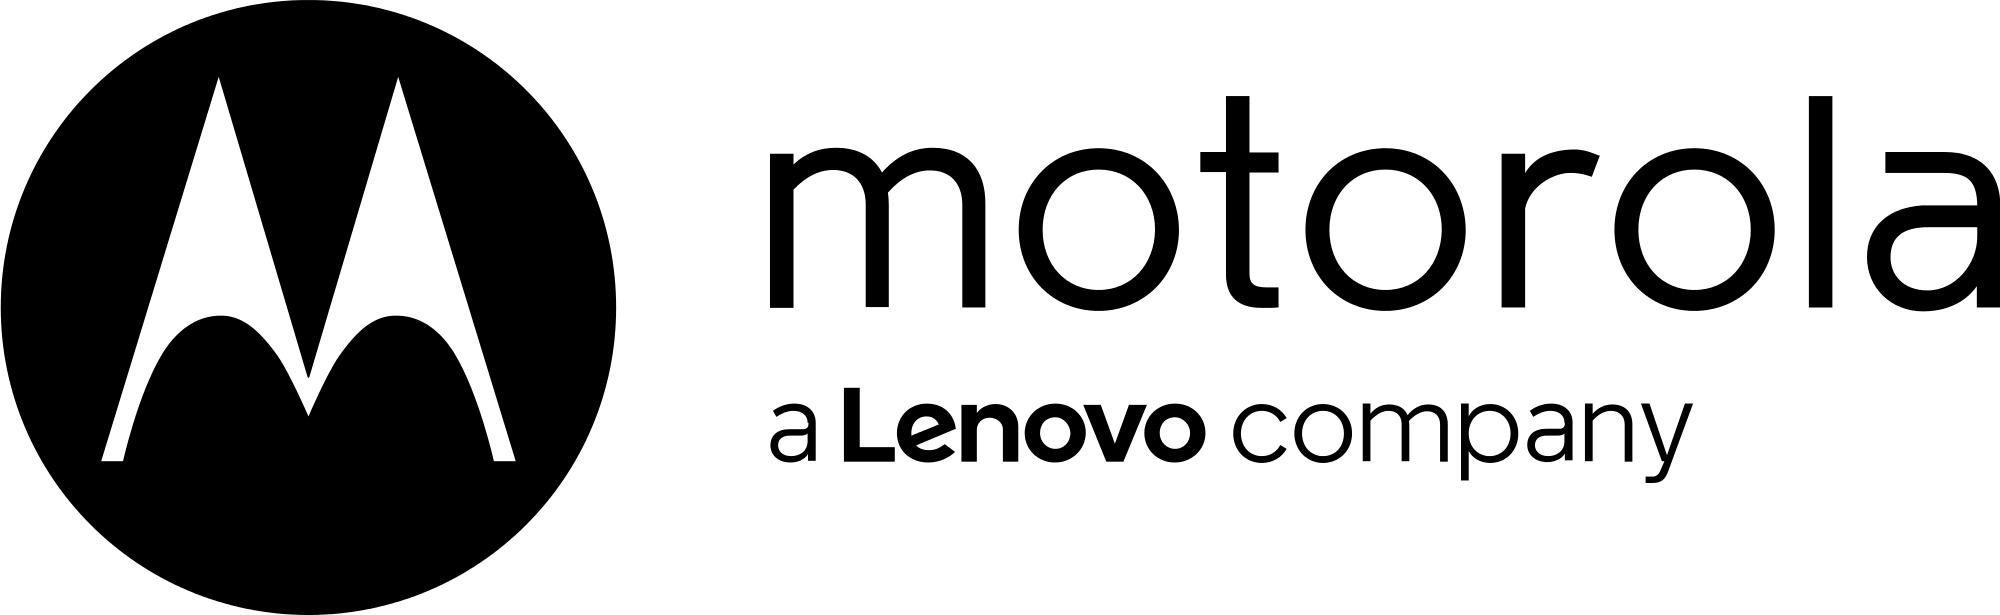 Motorola Mobility Logo - File:Motorola Mobility Logo 2015.svg - Wikimedia Commons